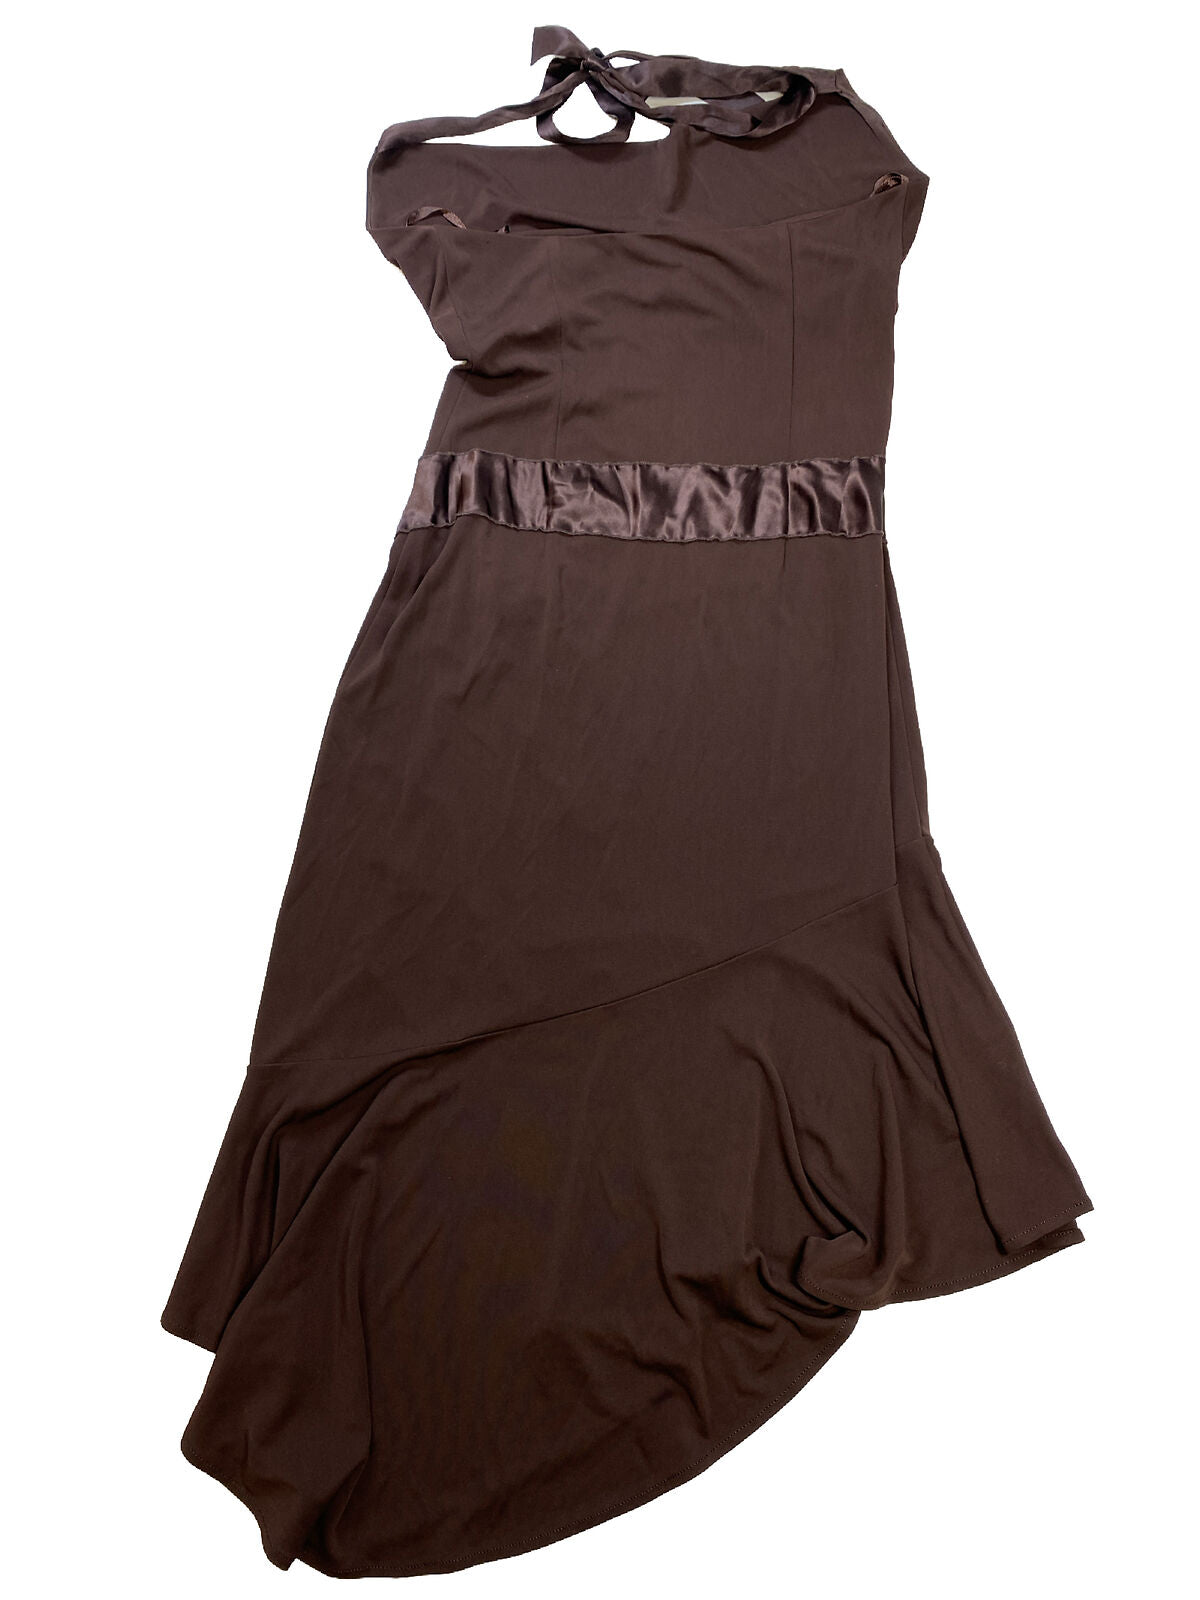 NEW BCBGMaxazria Women's Brown Halter Neck Asymmetrical Dress - S